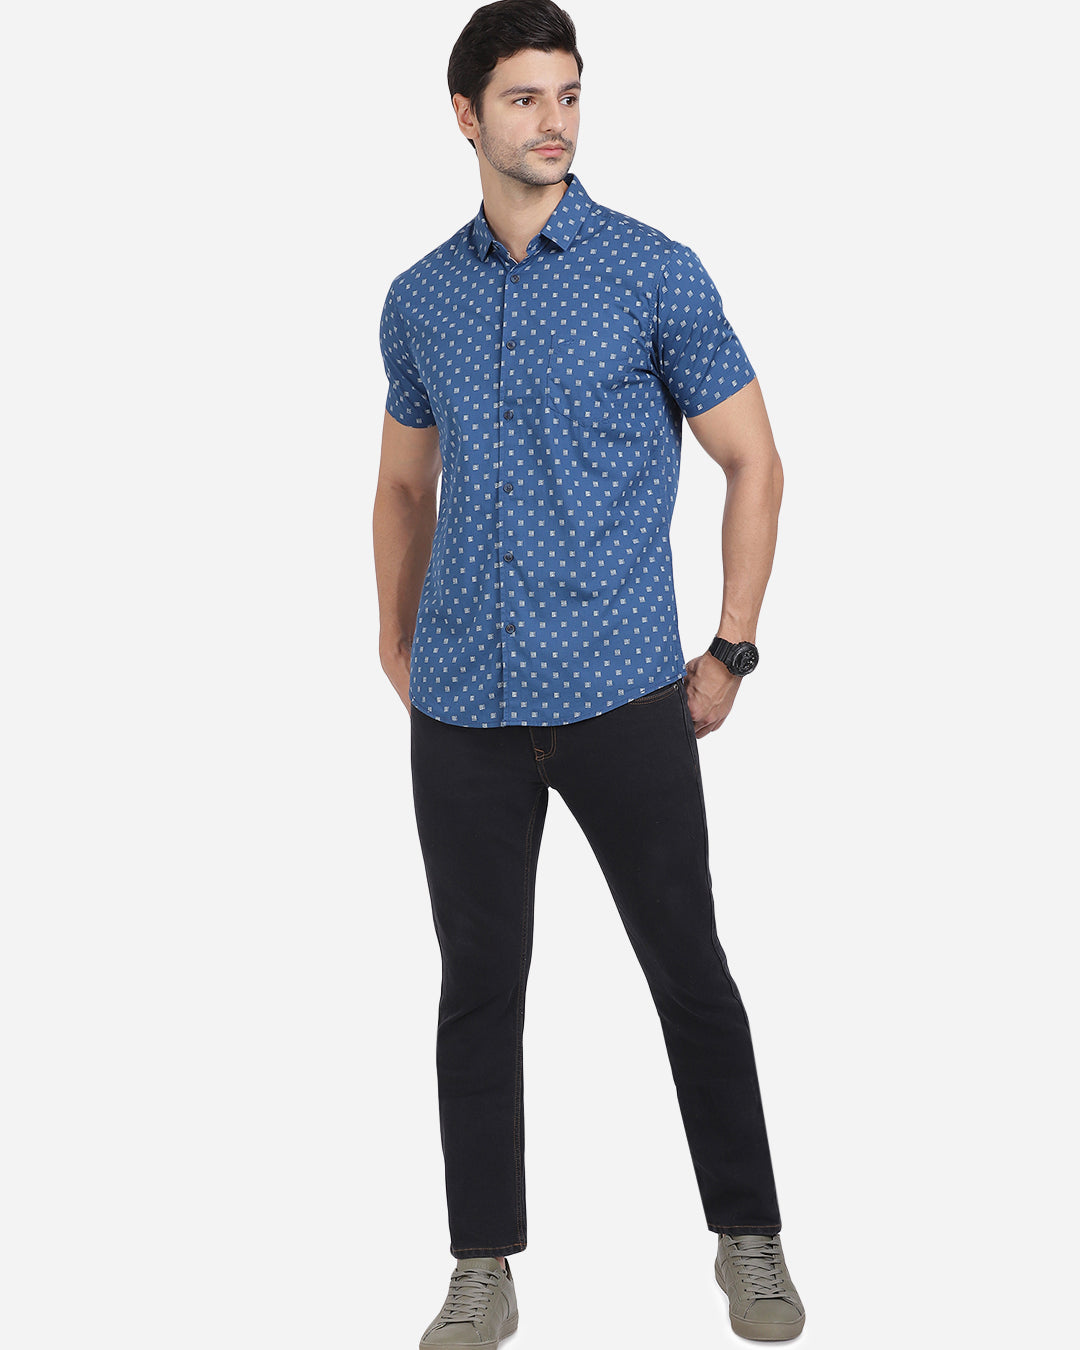 Crocodile Casual Half Sleeve Slim Fit Printed Shirt Blue for Men